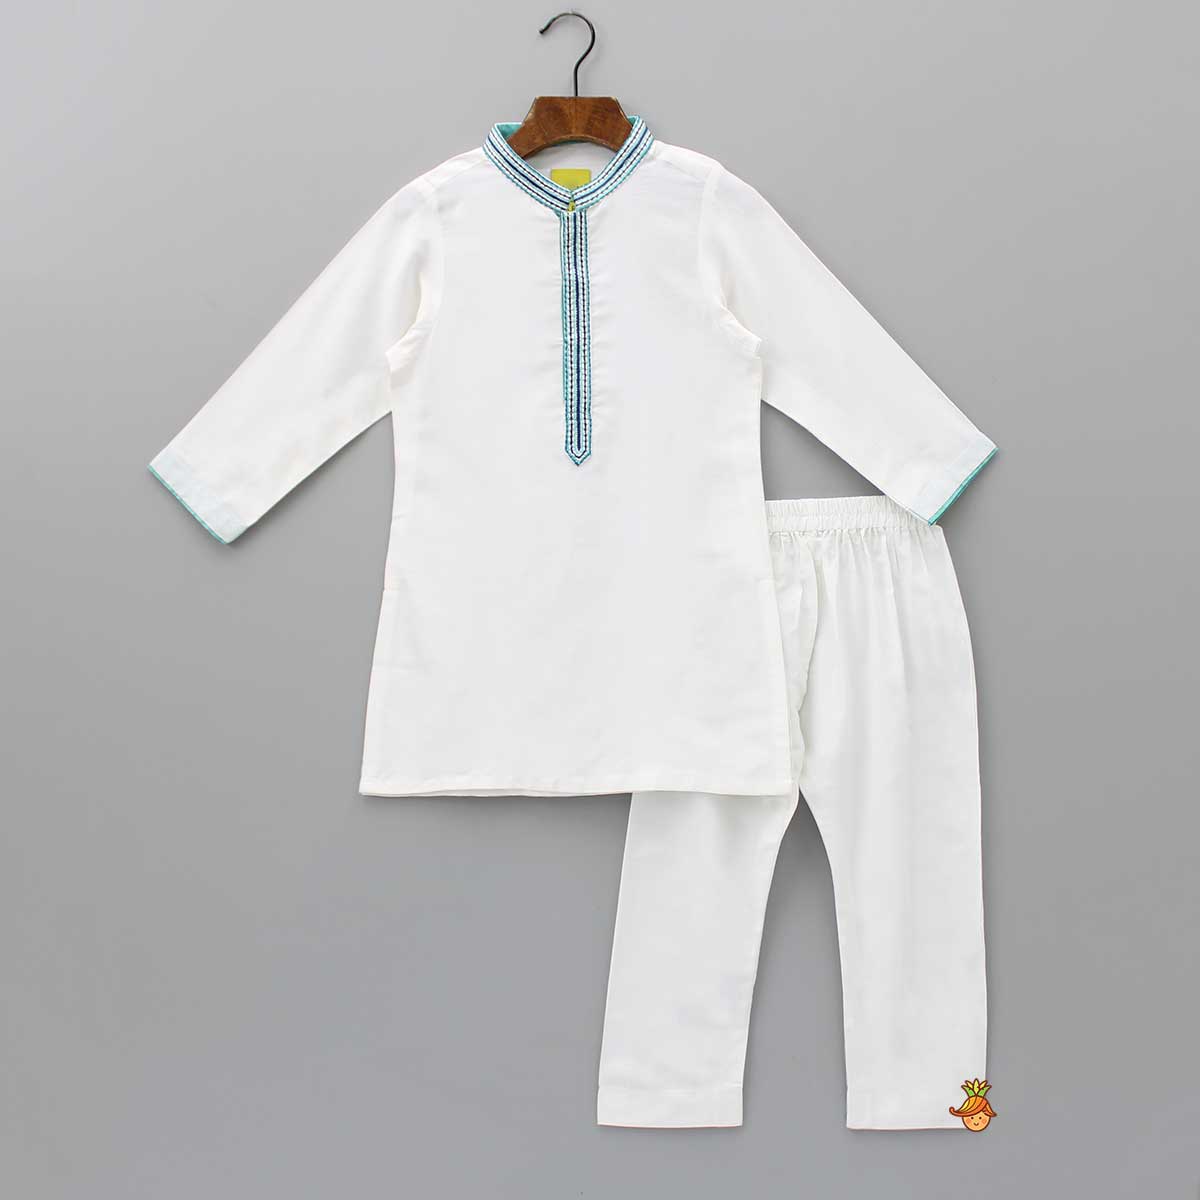 Embroidered Front Placket White Kurta With Pocket Detail Blue Jacket And Pyjama